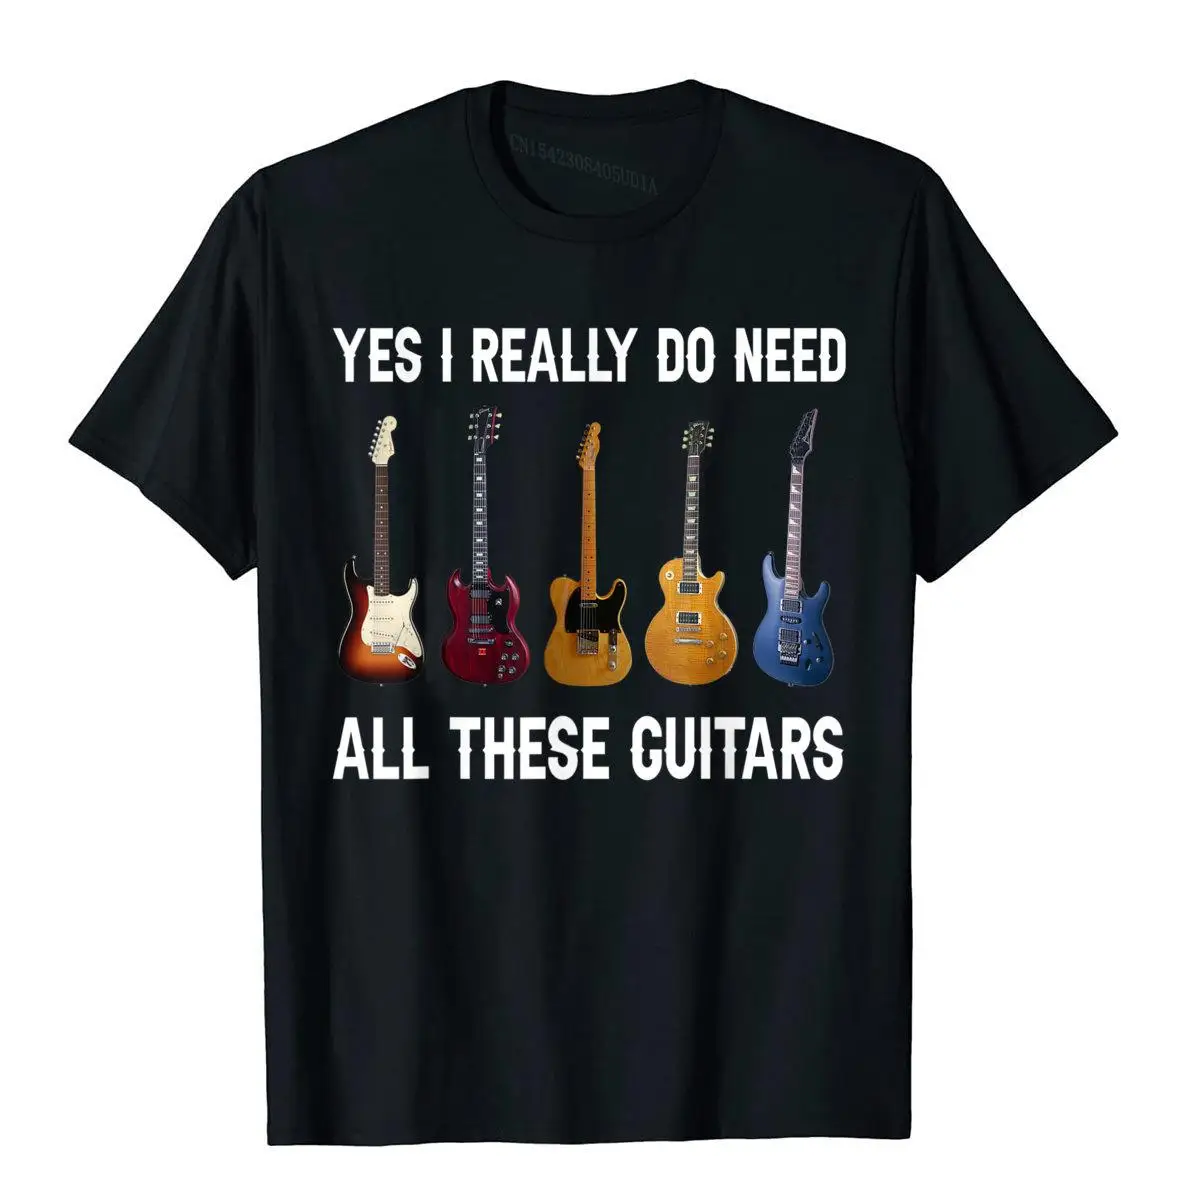 Yes I Really Do Need All These Guitars T-Shirt Funny Fashionable T Shirt Cotton Man Tops Shirts Funny Kawaii